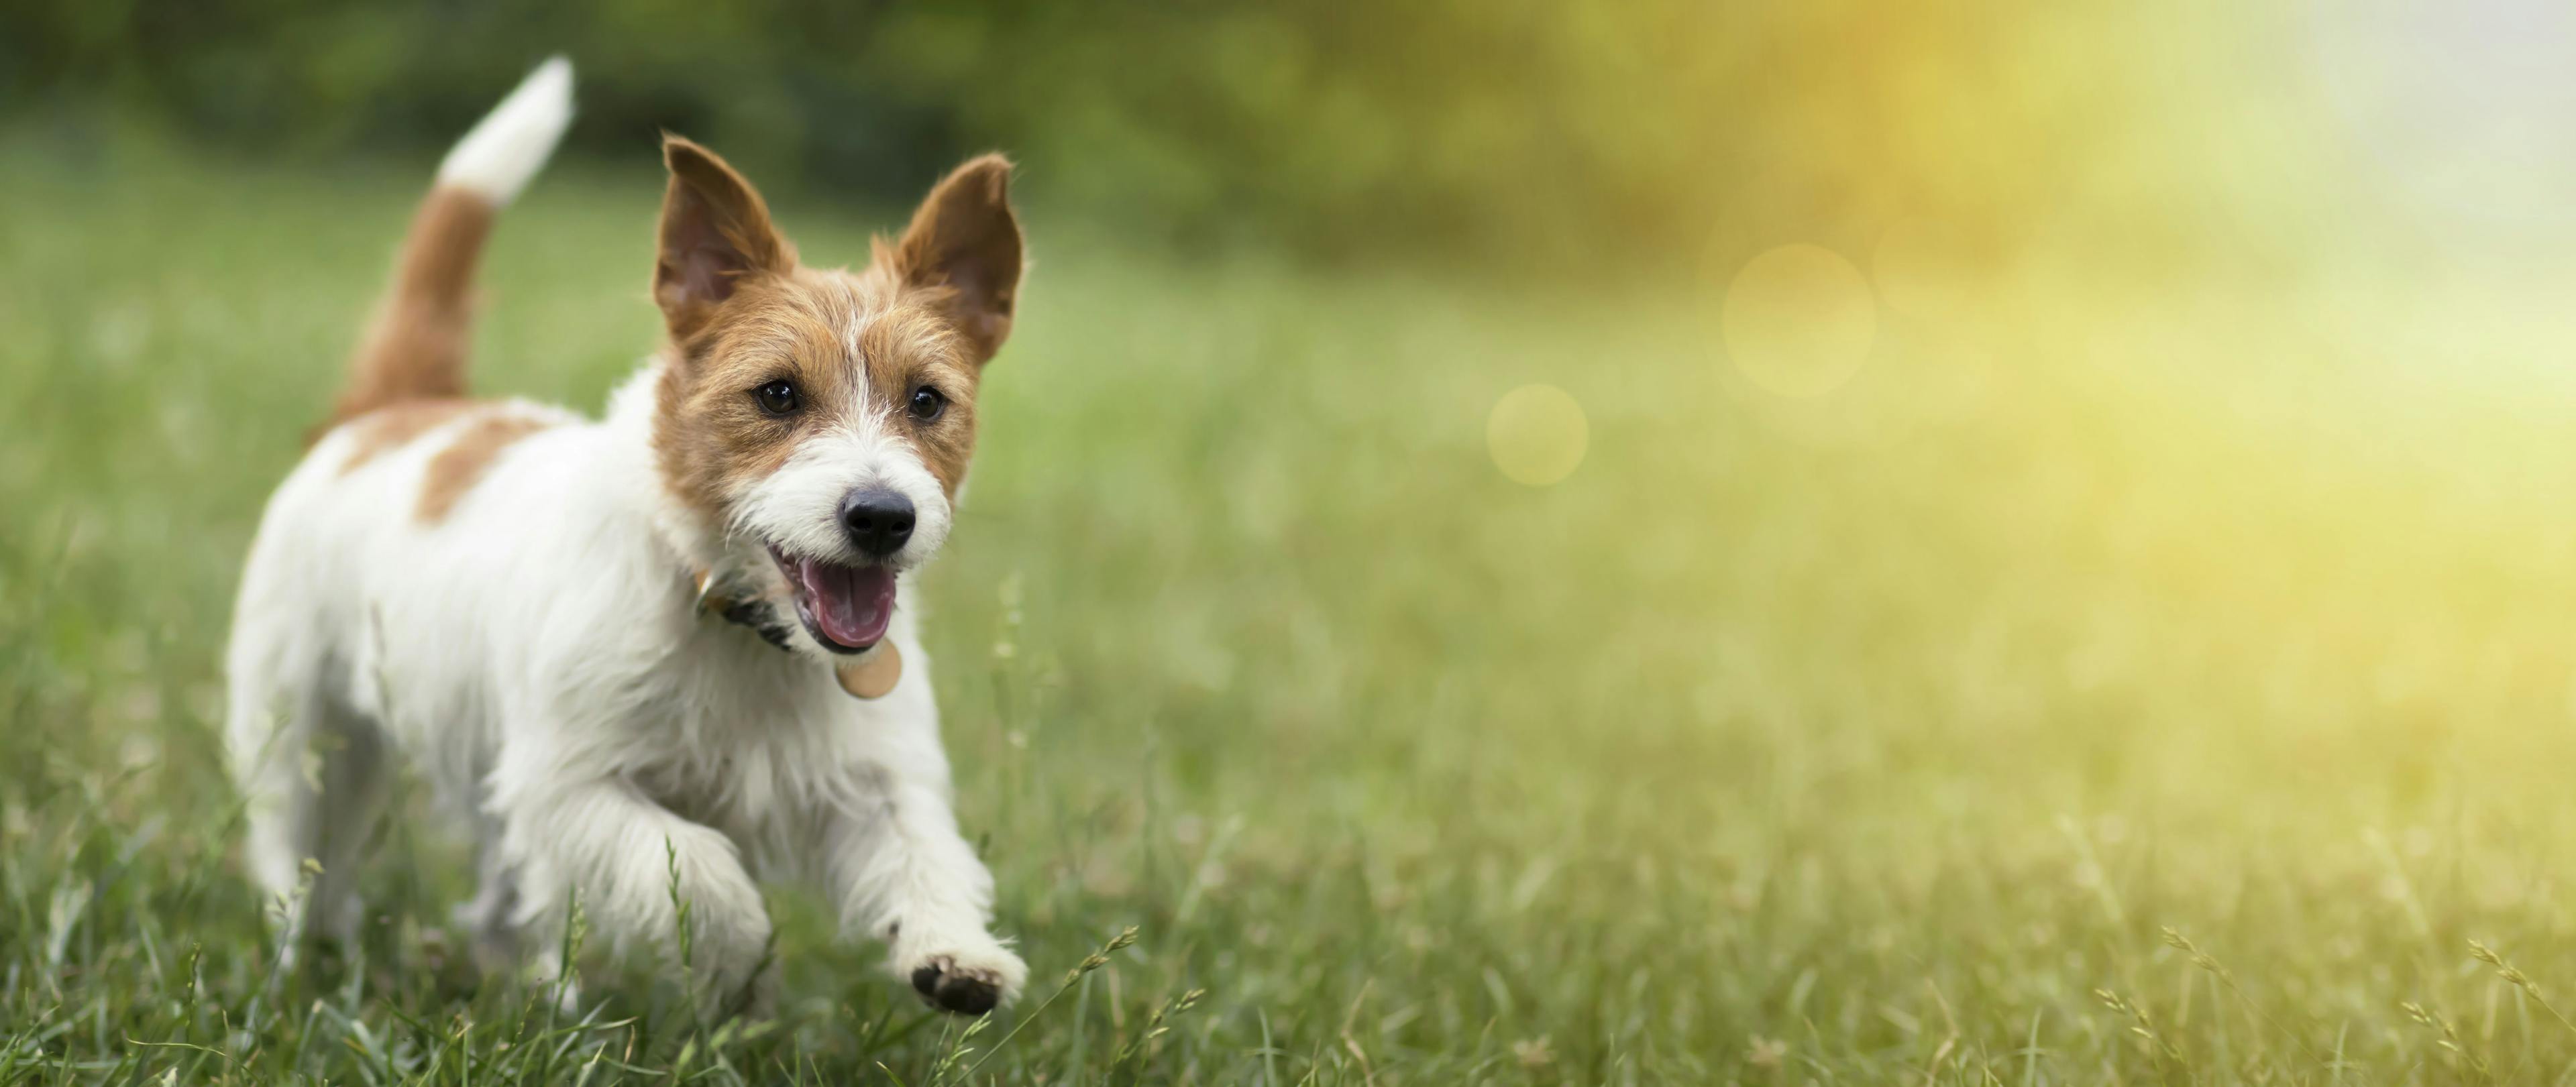 cute dog running in field